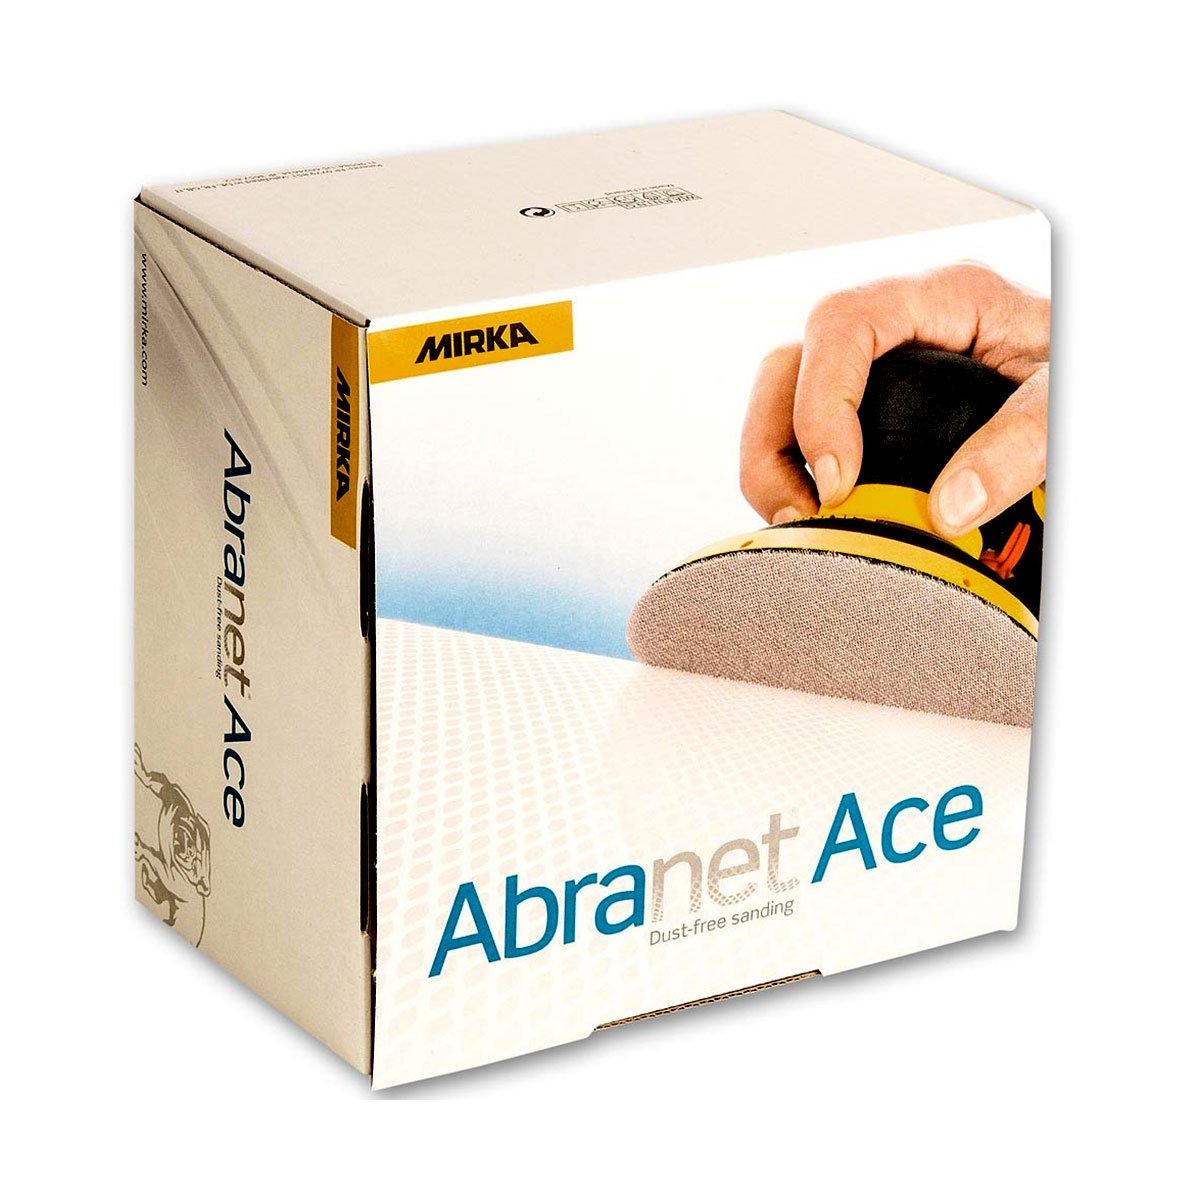 6" Abranet Ace Abrasive (Box of 50)